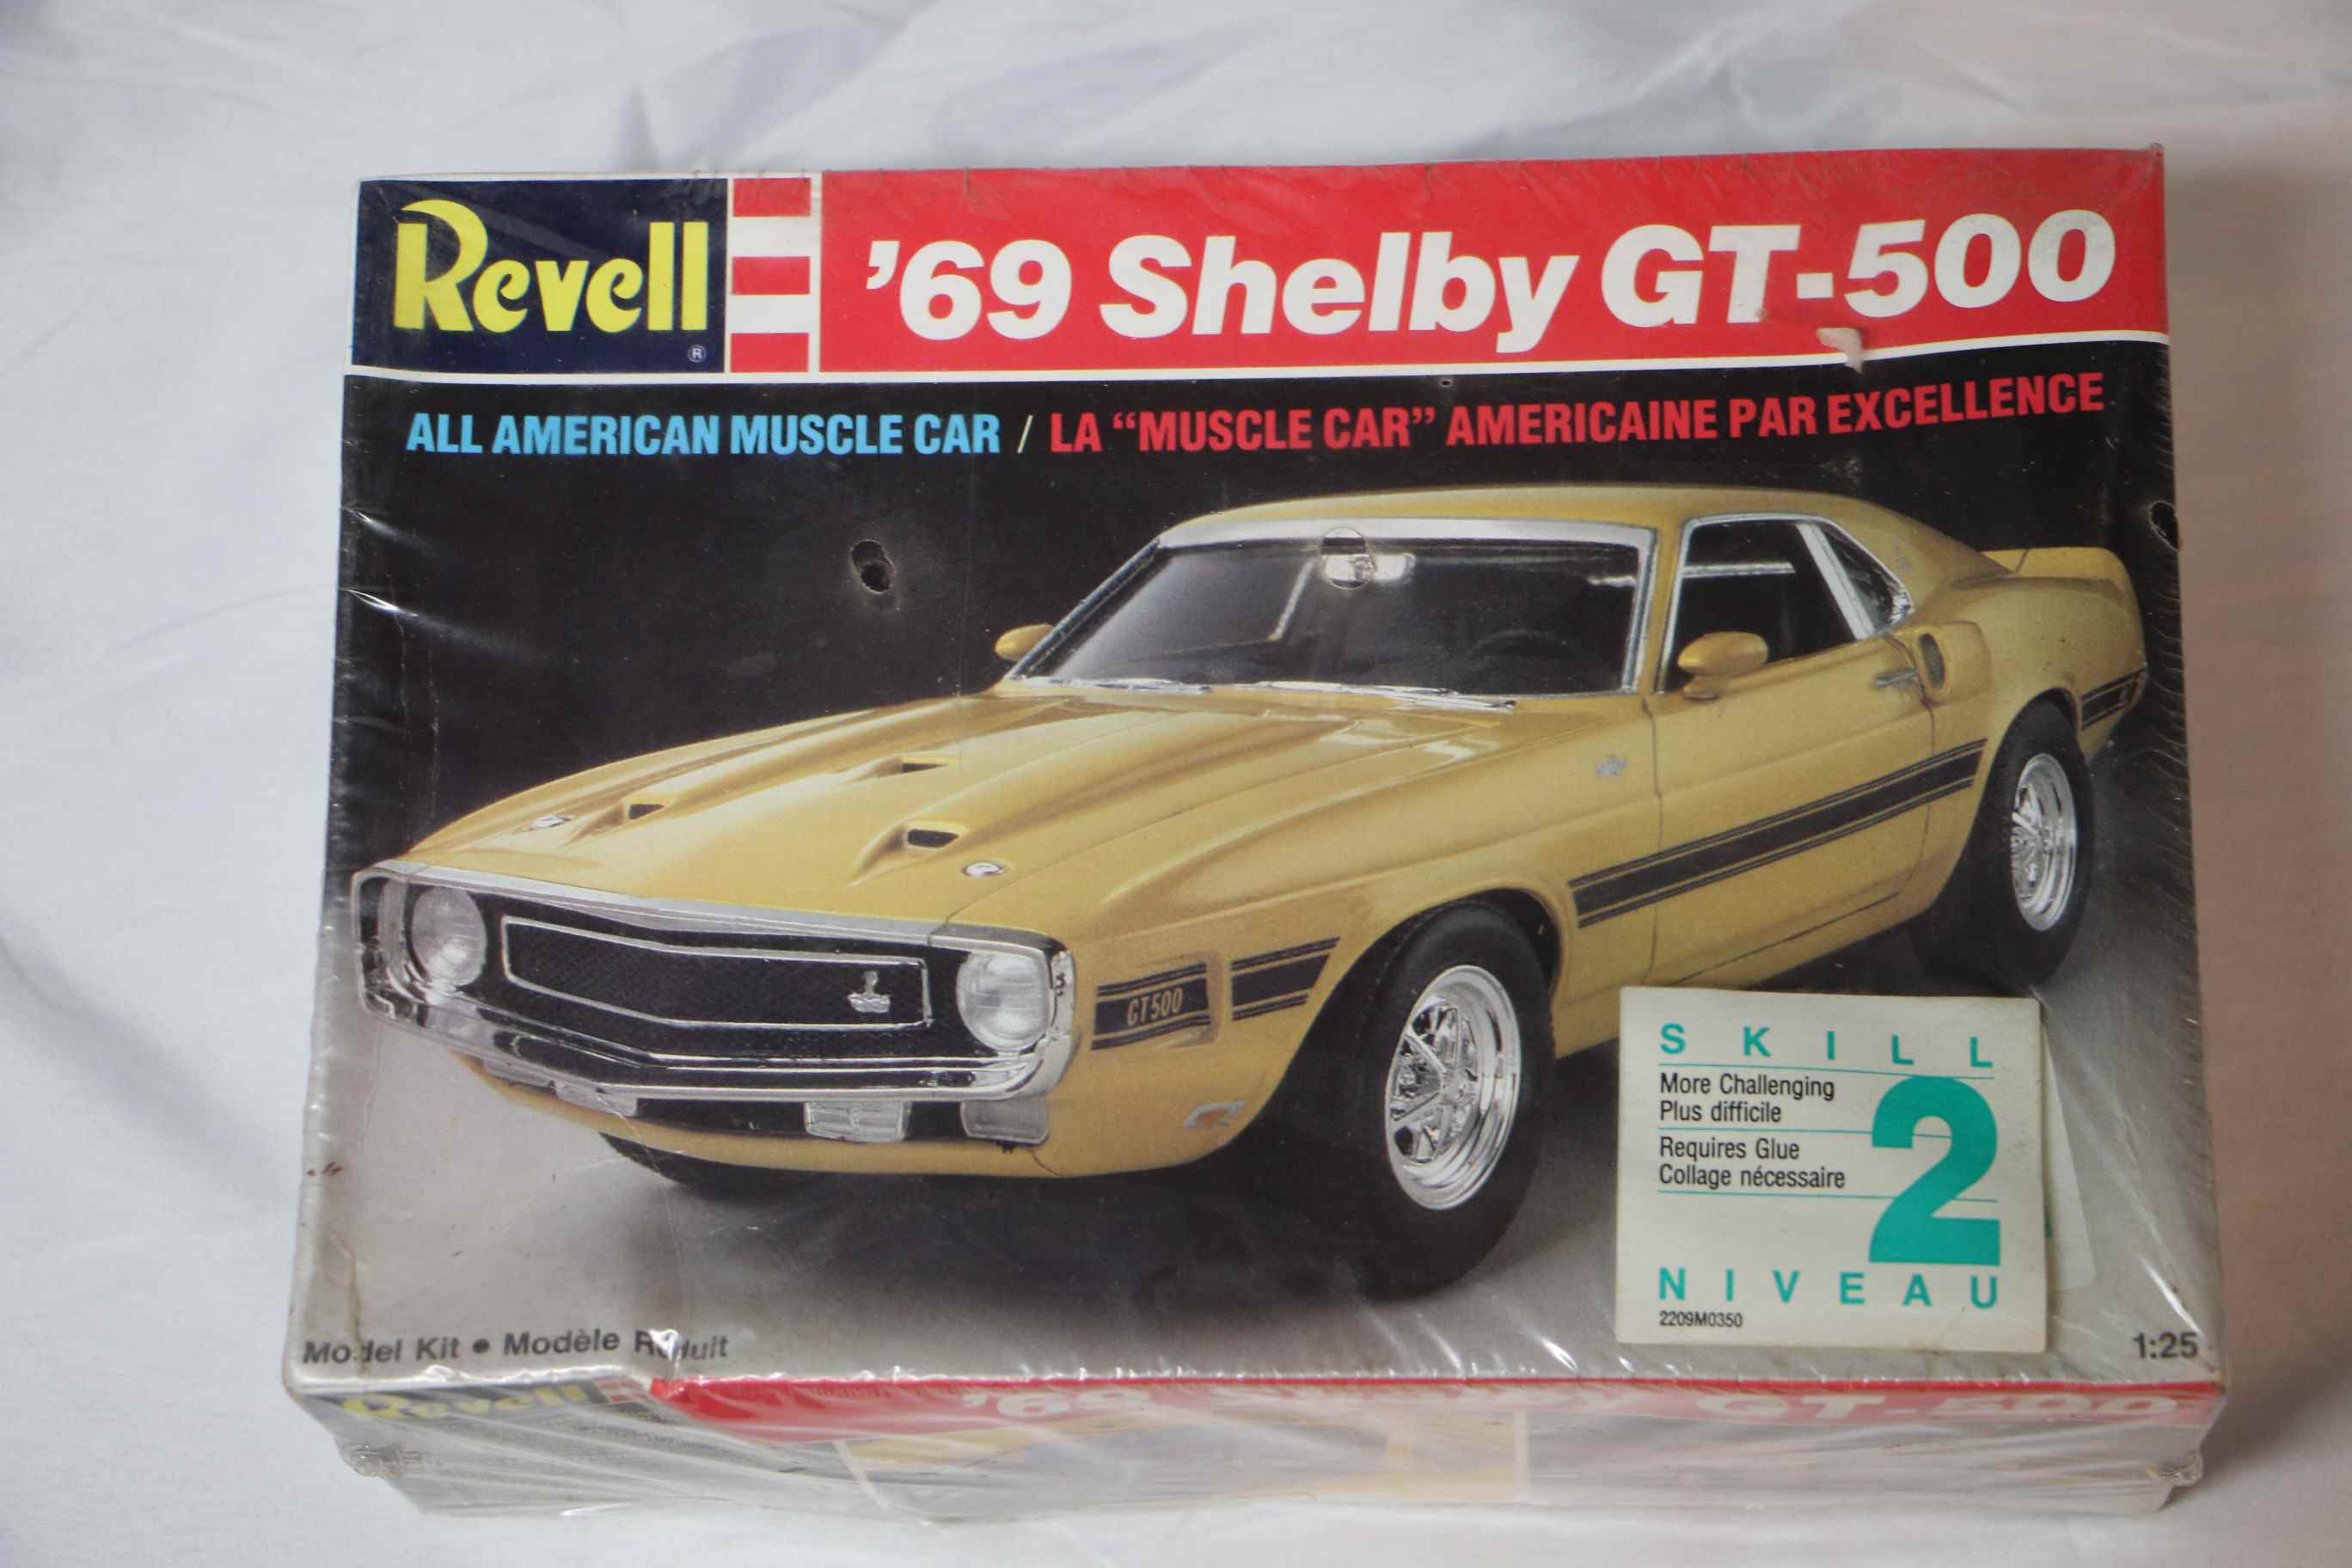 REV7161 - Revell 1/25 1969 Shelby GT-500 All American